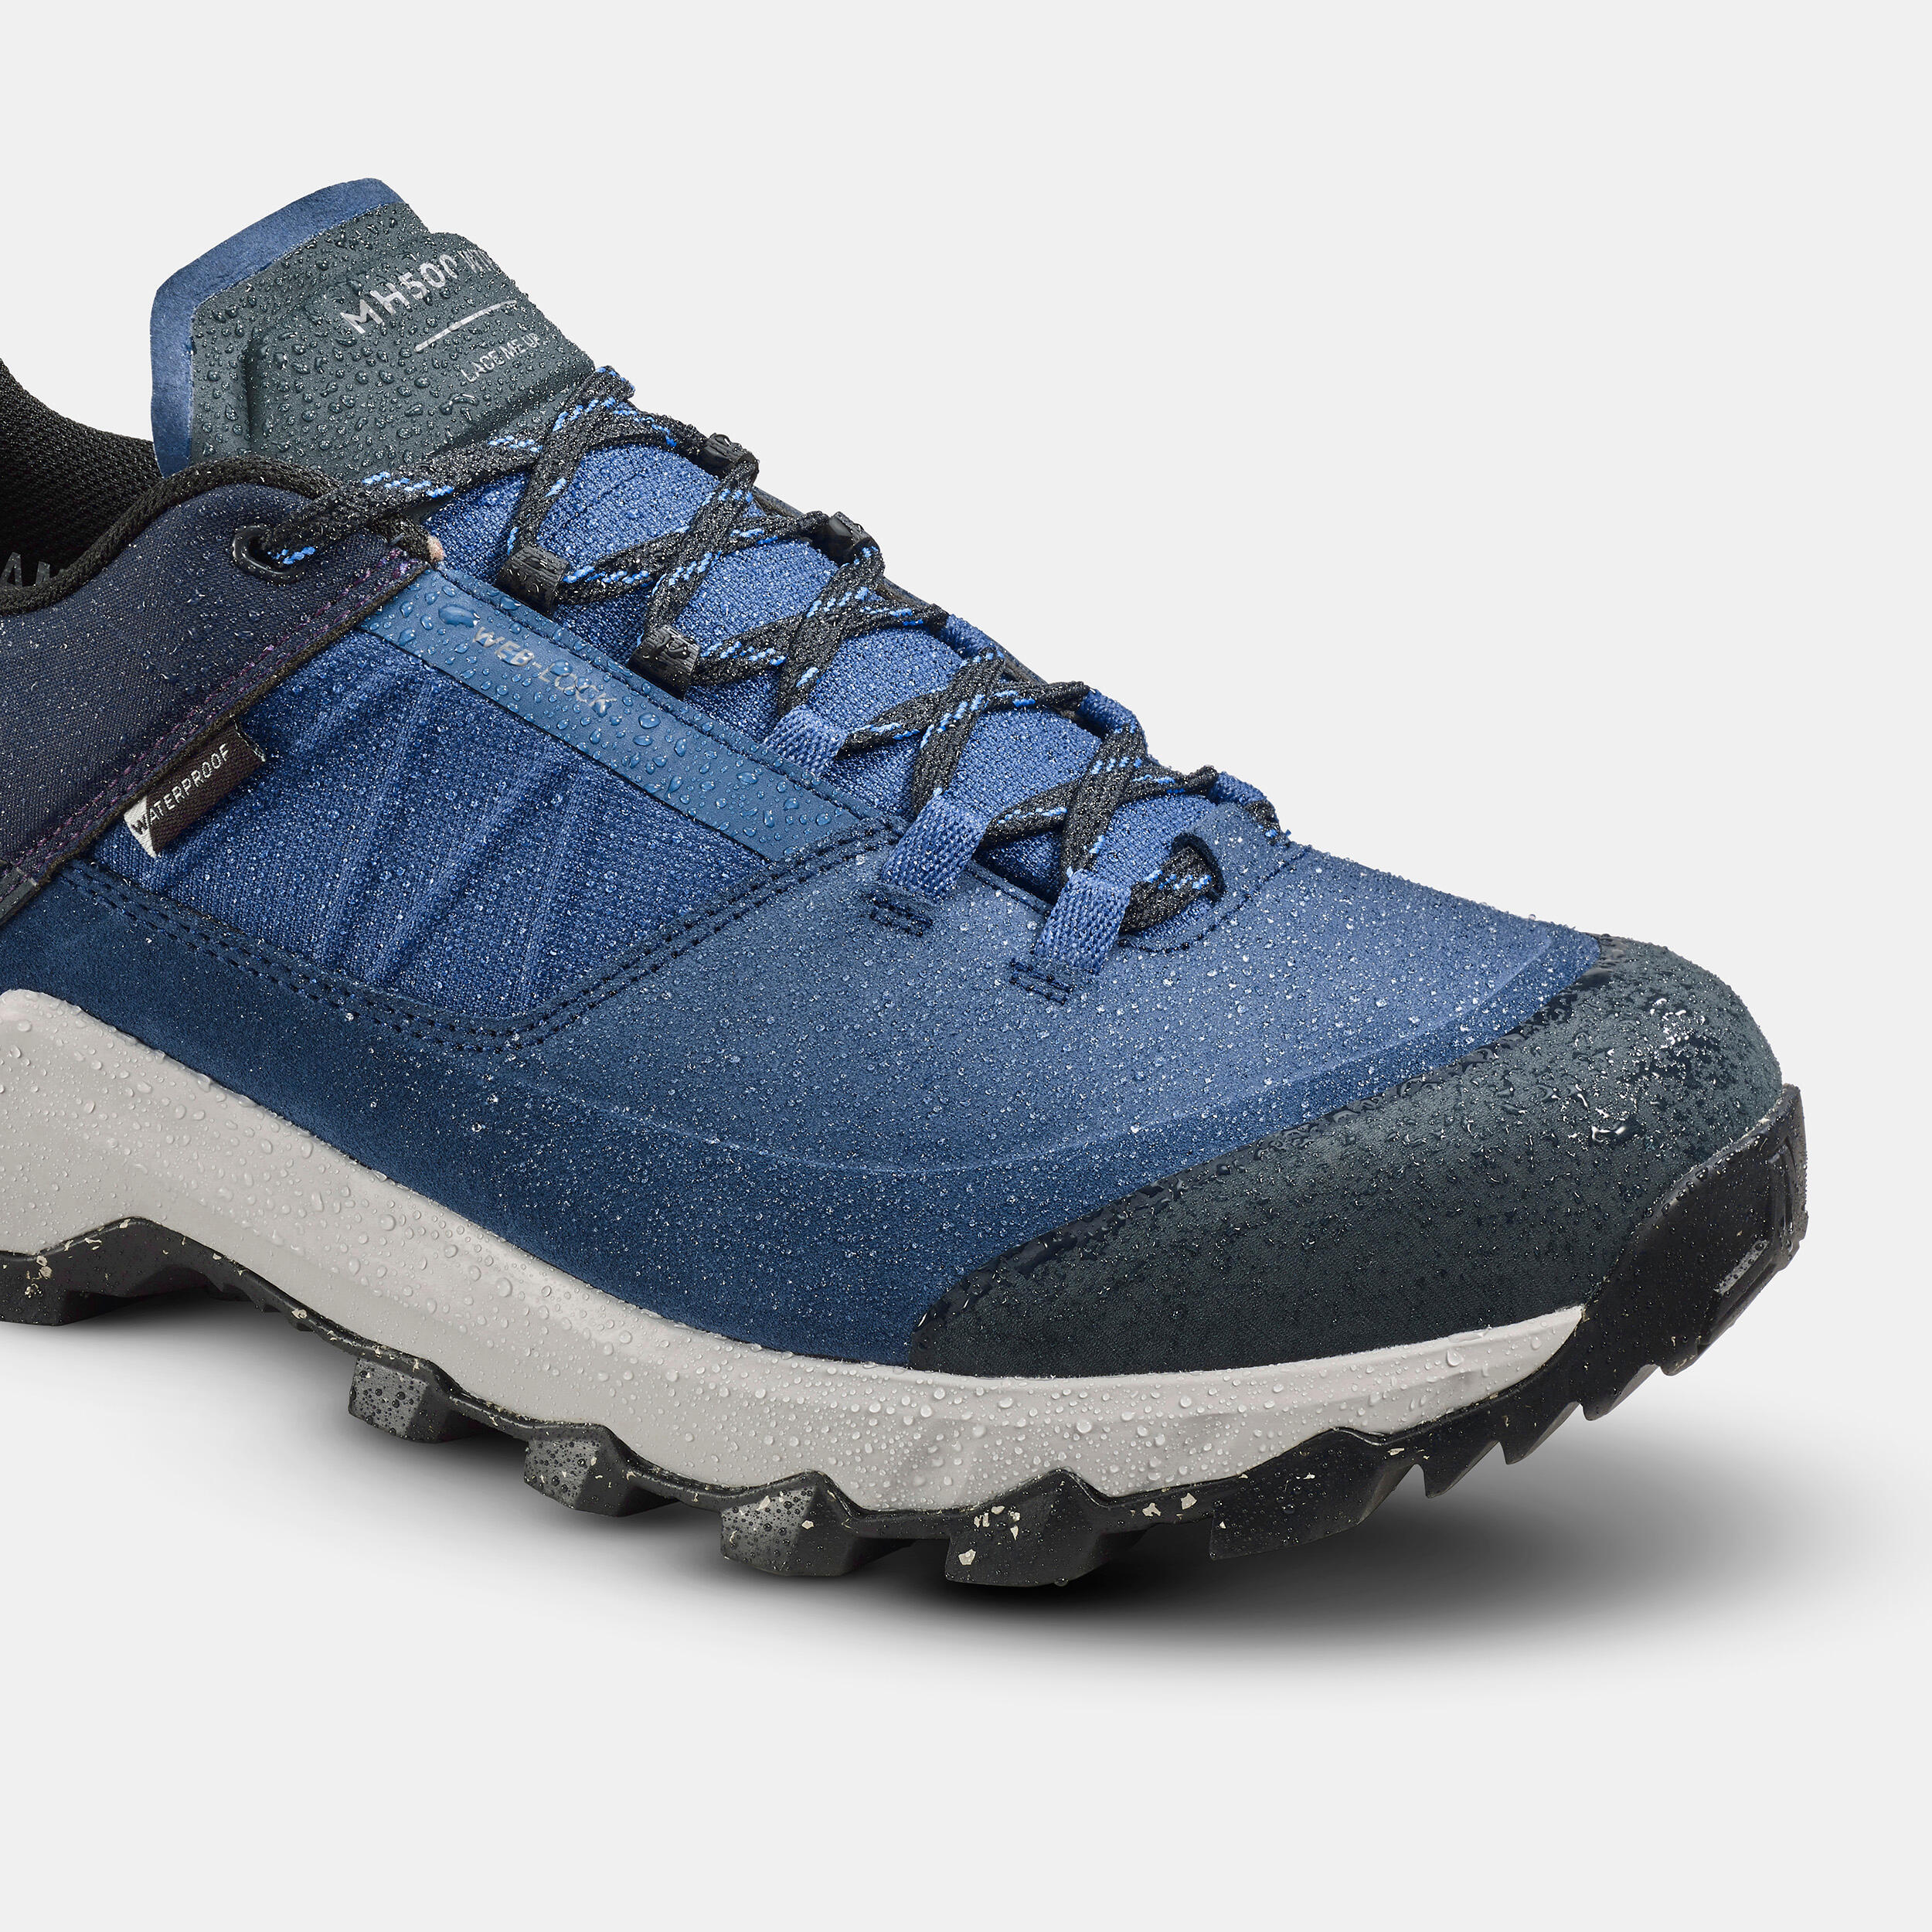 Men's waterproof hiking shoes - MH500 blue 4/8